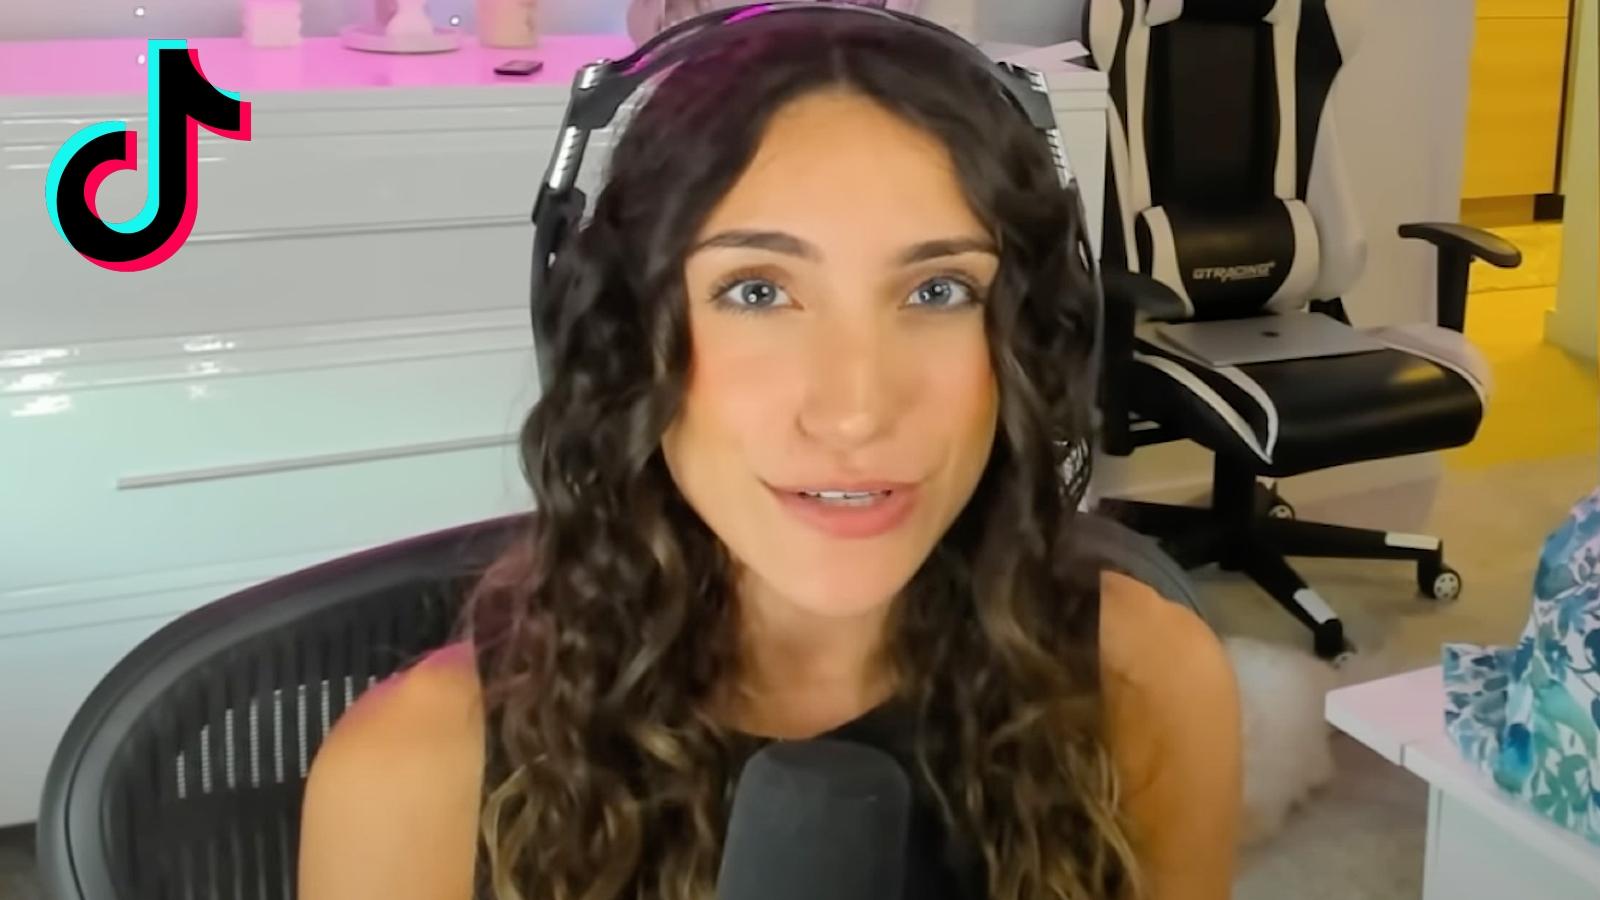 Warzone streamer trolls Nadia accusers with fake Nadia on TikTok - Dexerto